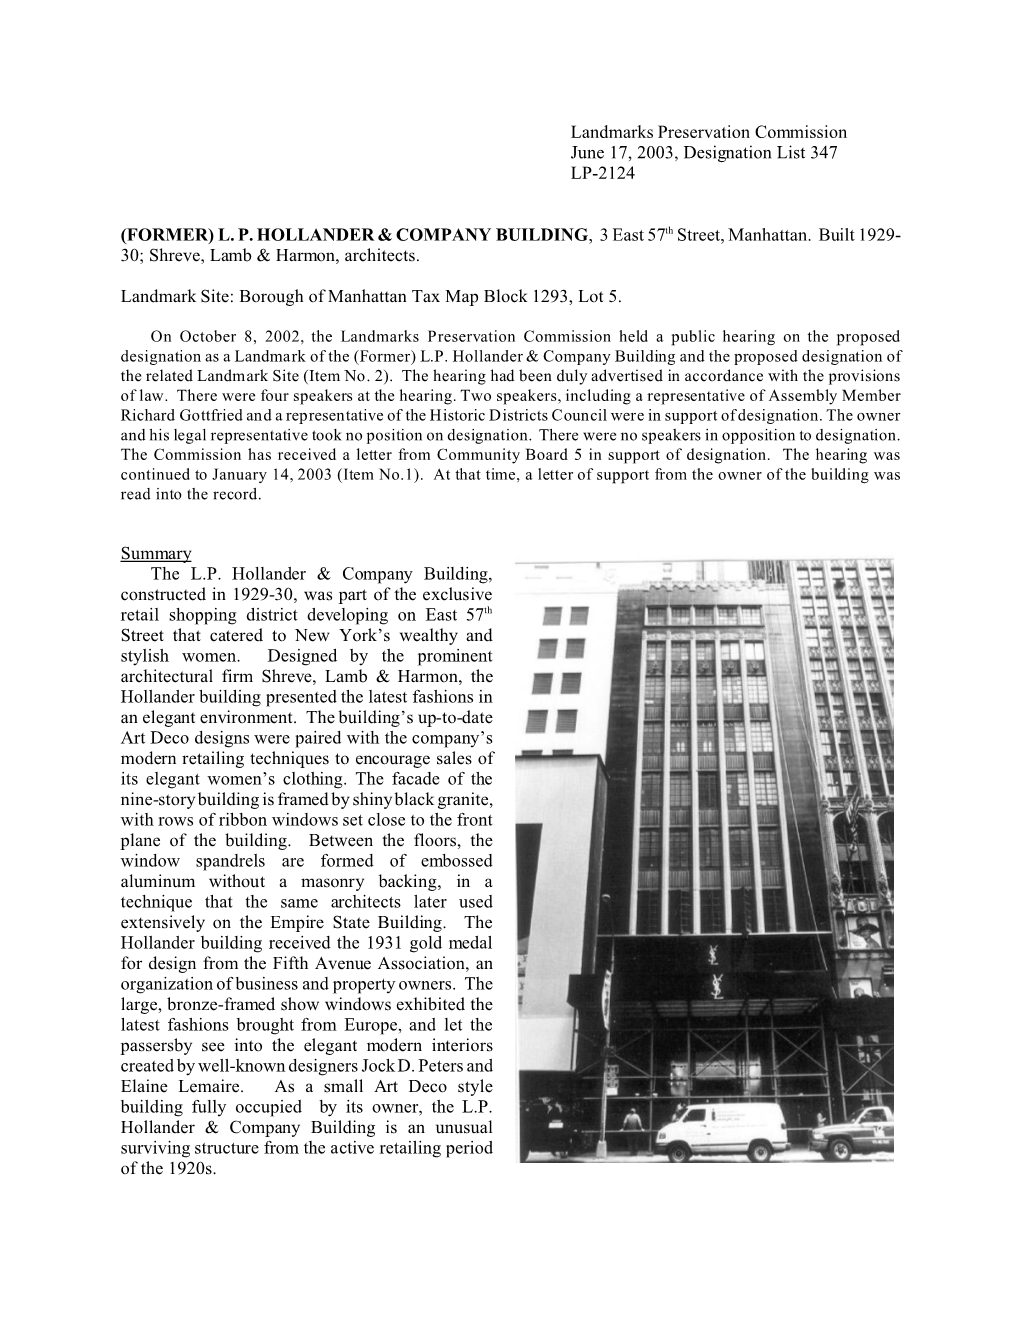 (Former) L. P. Hollander & Company Building Designation Report